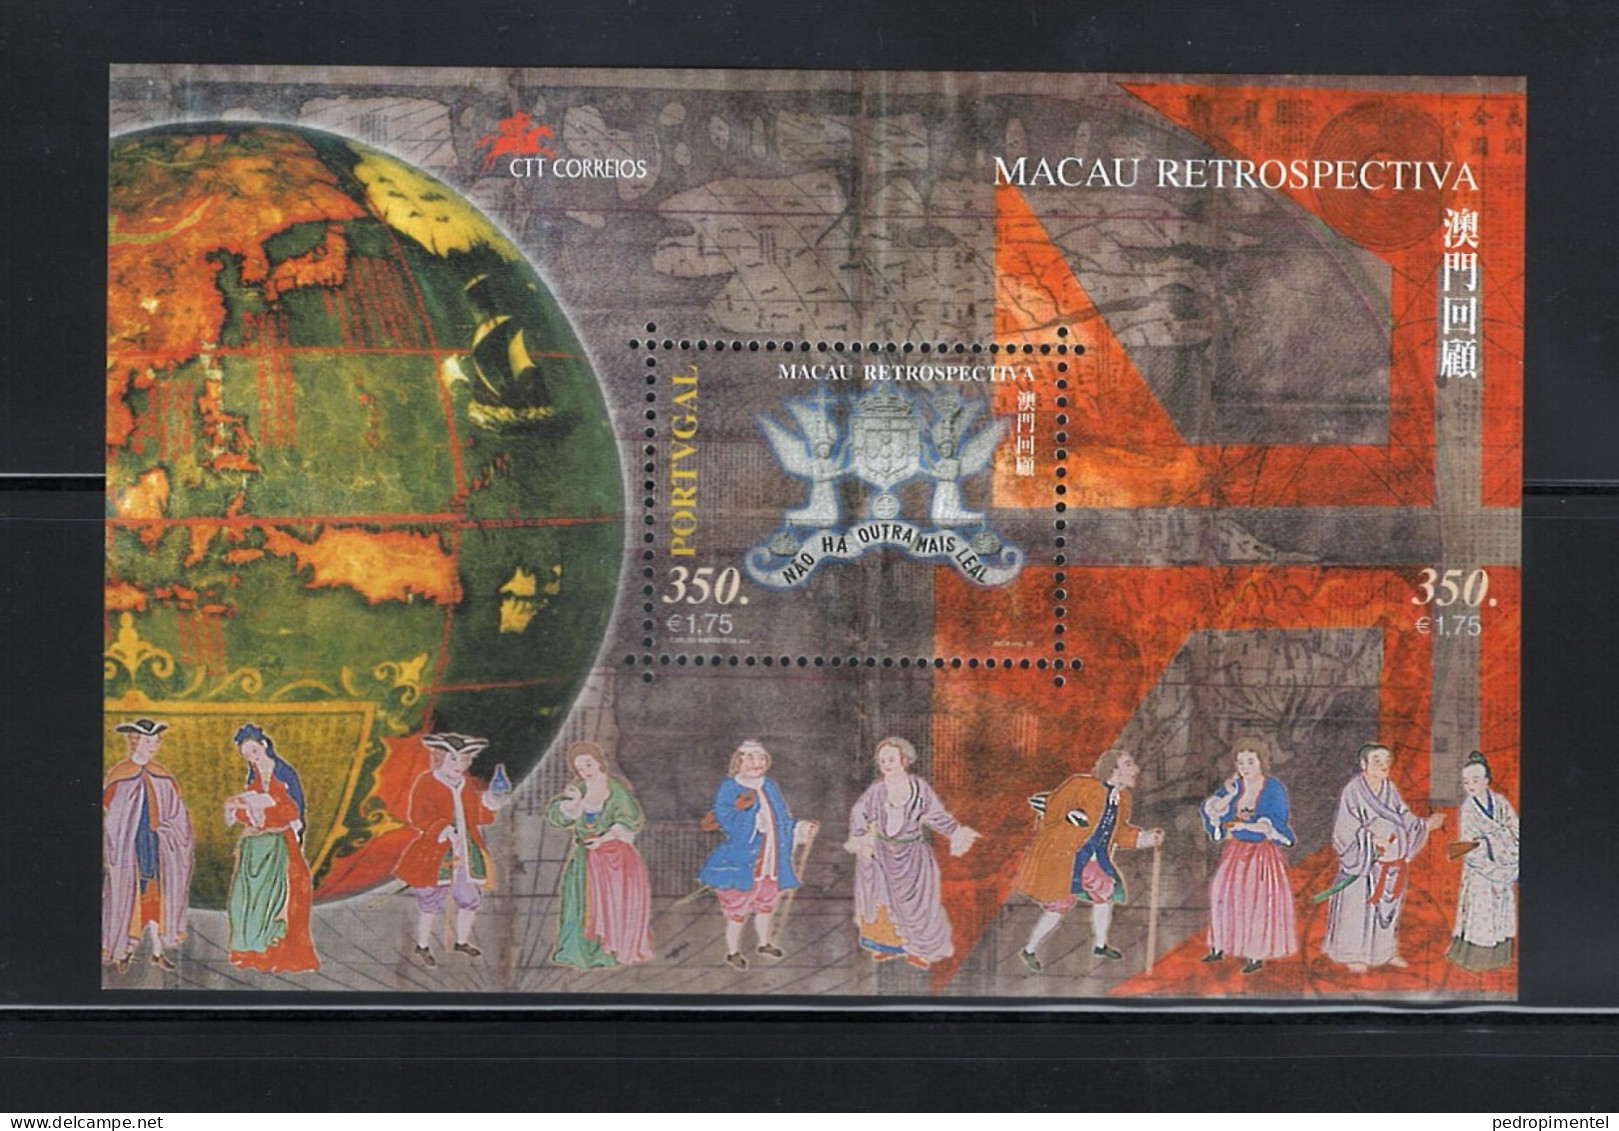 Portugal Stamps 1999 "Macau Retrospective" Condition MNH Minisheet #2639 - Neufs